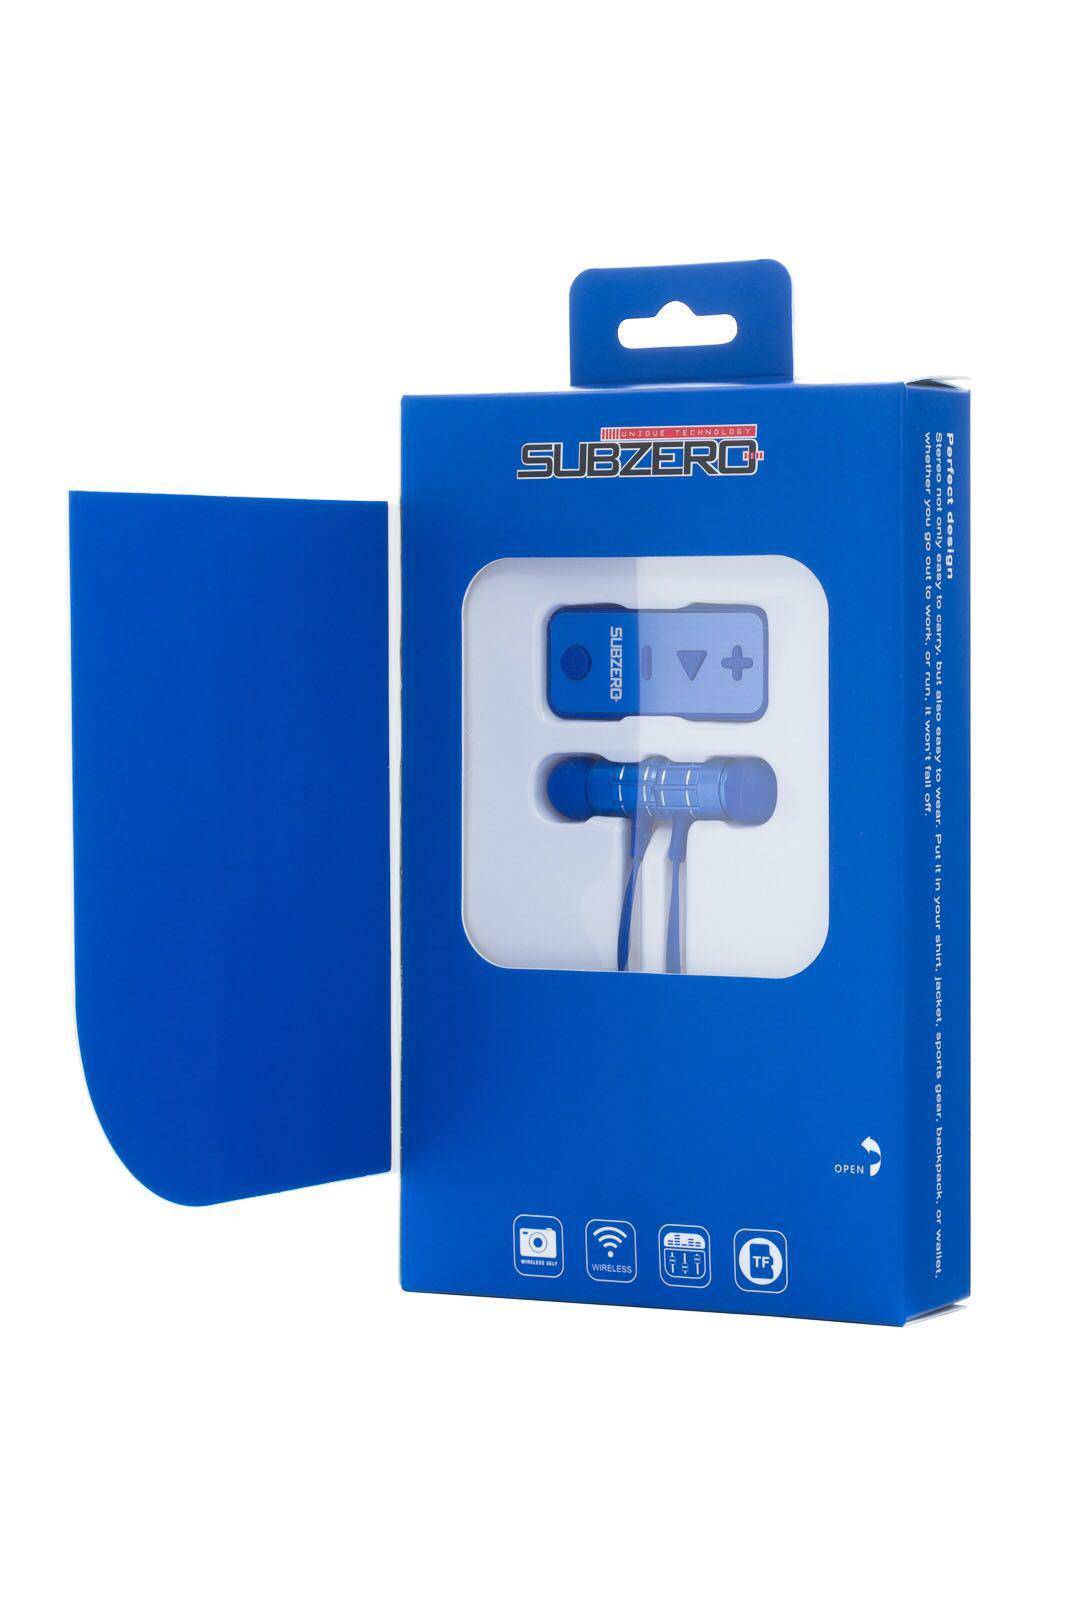 BLUE BLUETOOTH HEADPHONES SBZ-020 WITH SD CARD SLOT